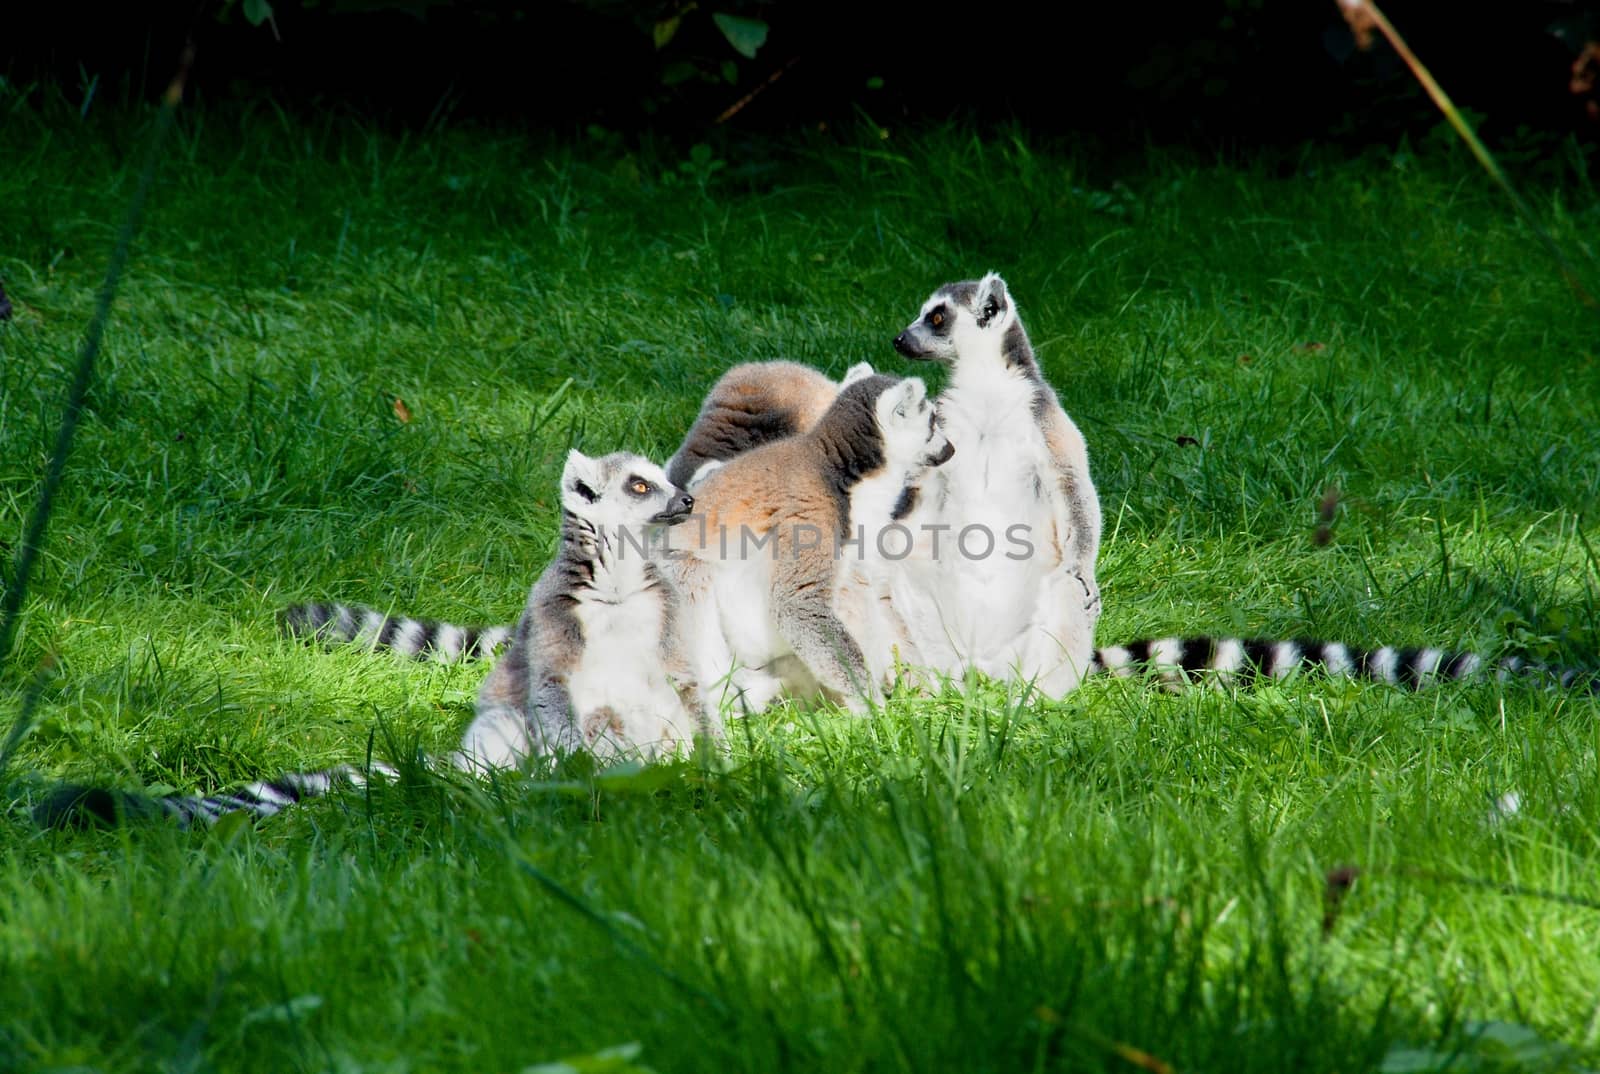 Lemur family by Dermot68